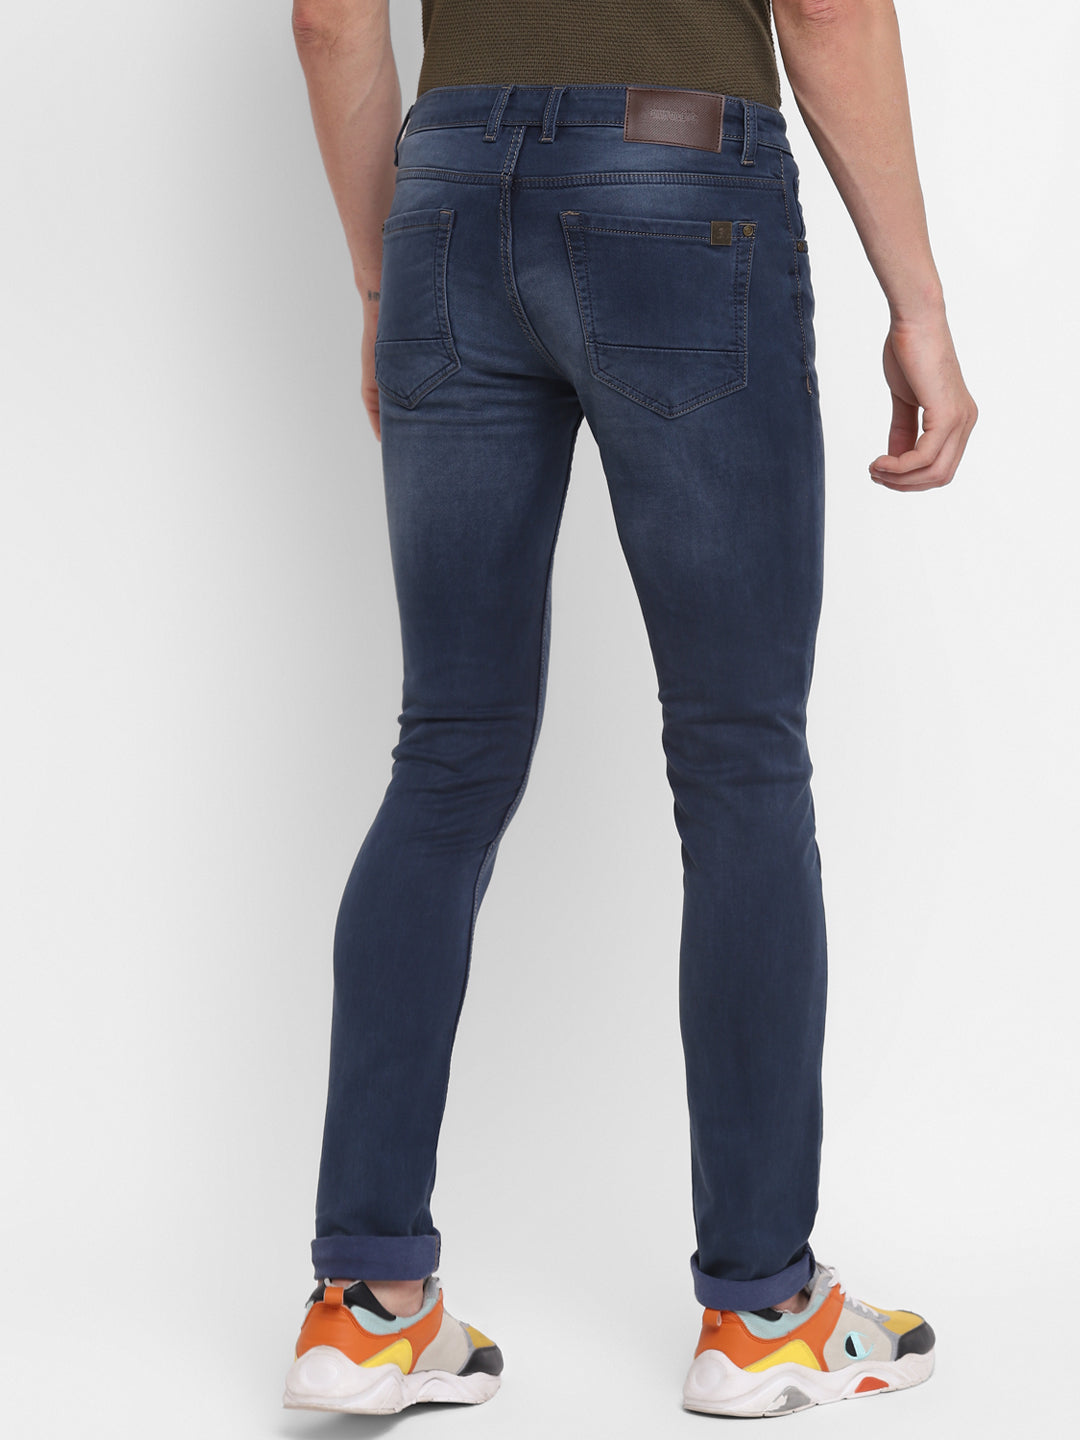 Blue Narrow Fit Jeans